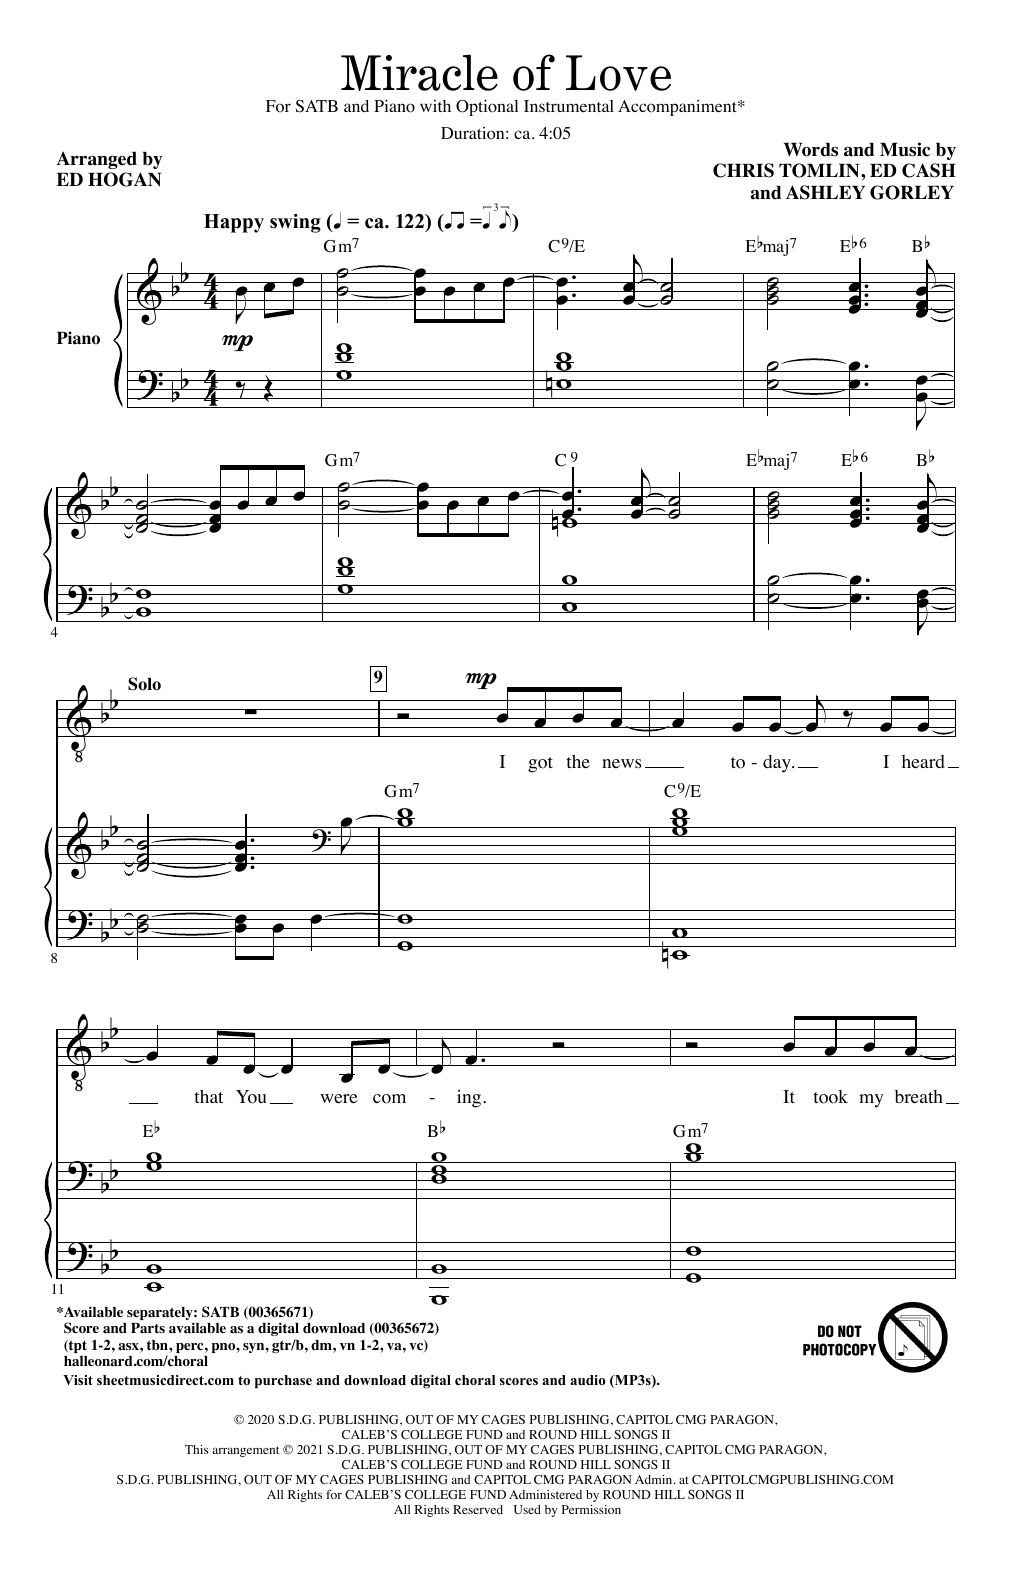 Chris Tomlin Miracle Of Love (arr. Ed Hogan) Sheet Music Notes & Chords for SATB Choir - Download or Print PDF